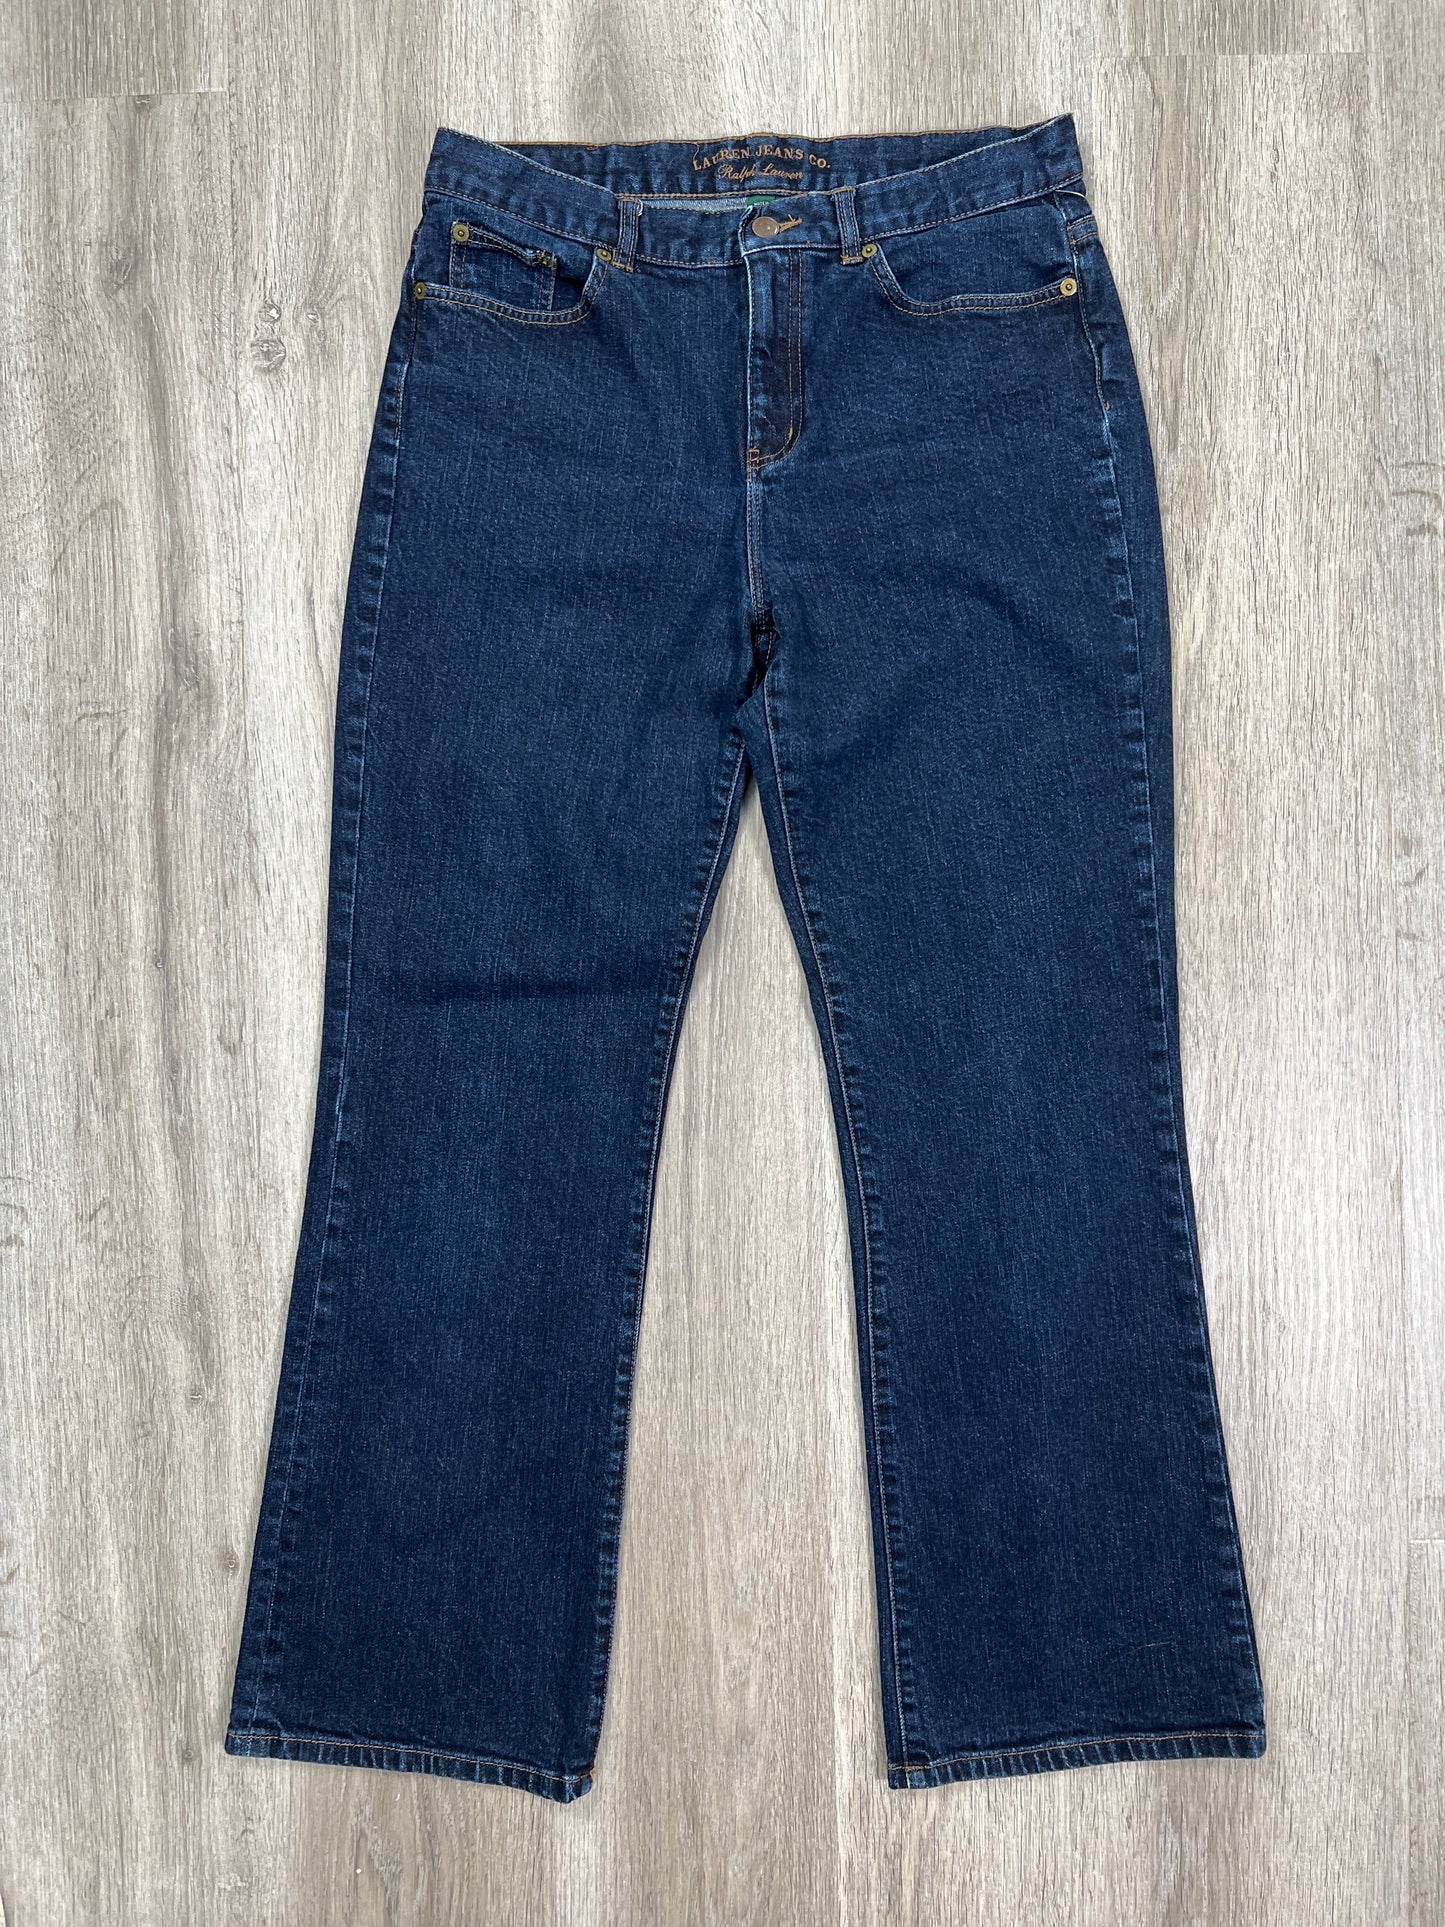 Jeans Boot Cut By Ralph Lauren  Size: 10